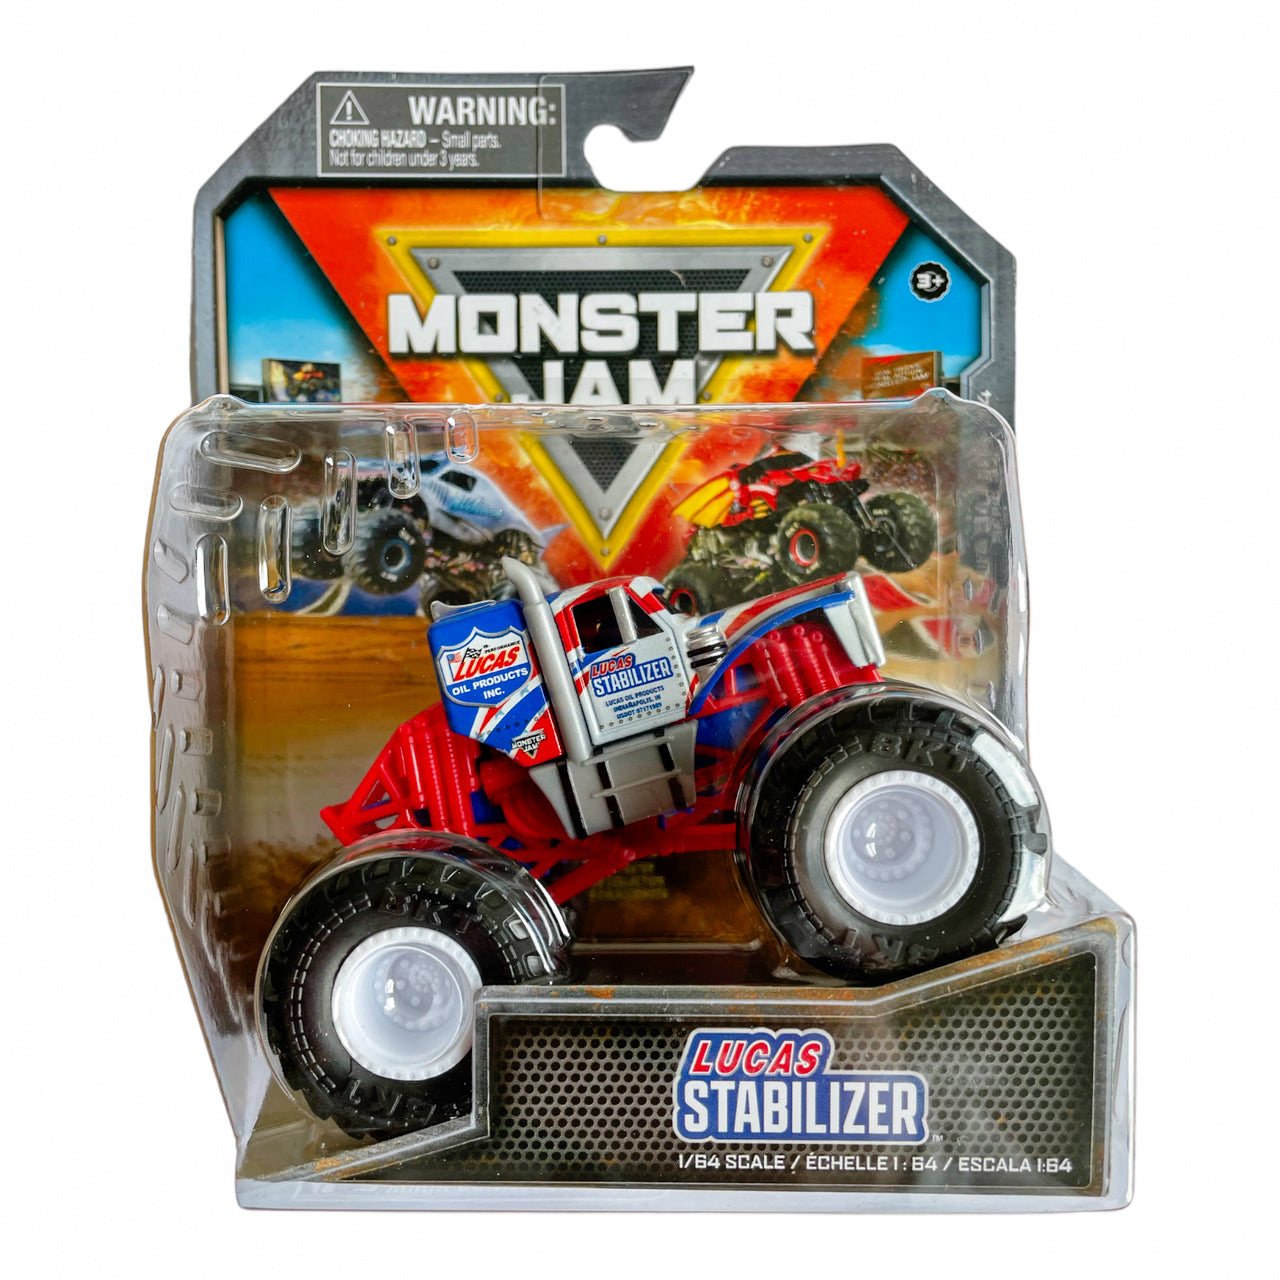 Monster Jam Die-Cast Vehicle 1:64 Scale Lucas Stabilizer Monster Jam